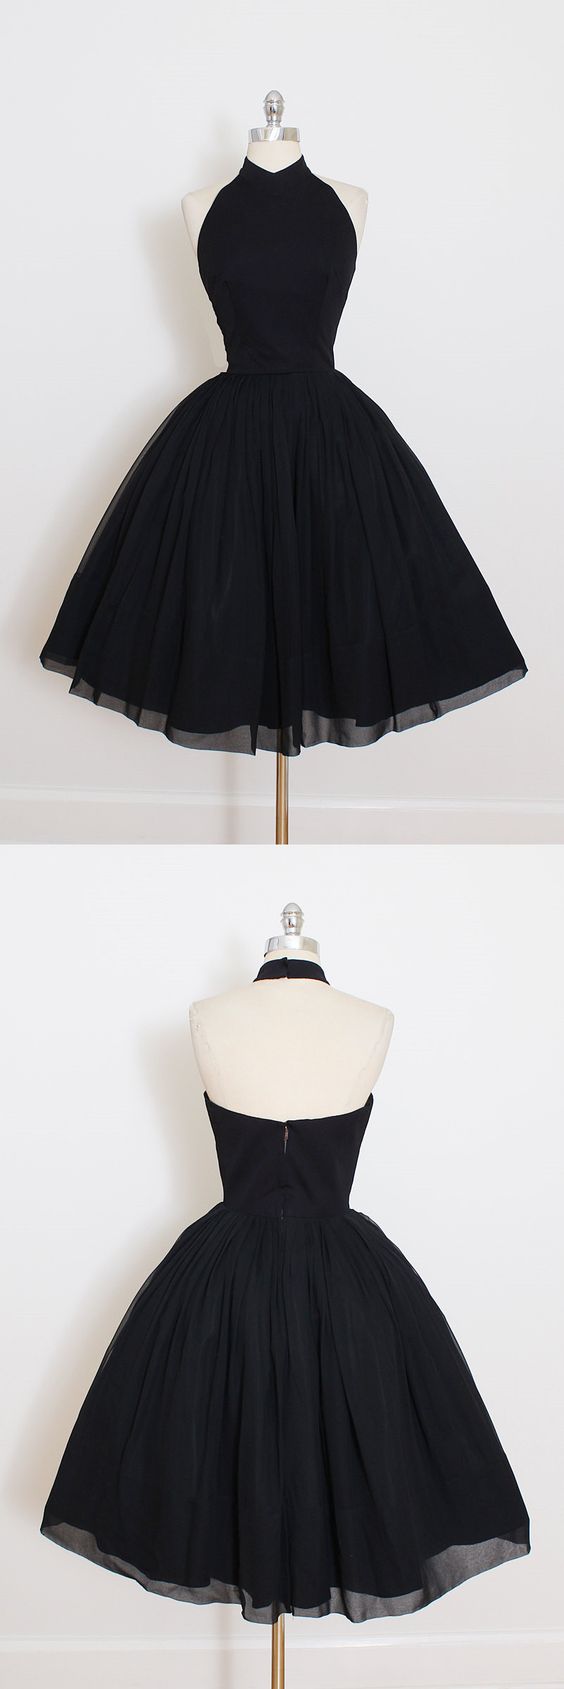 2018 Custom Made Black Chiffon Prom Dress,halter Homecoming Dress,short Mini Party Dress,high Quality